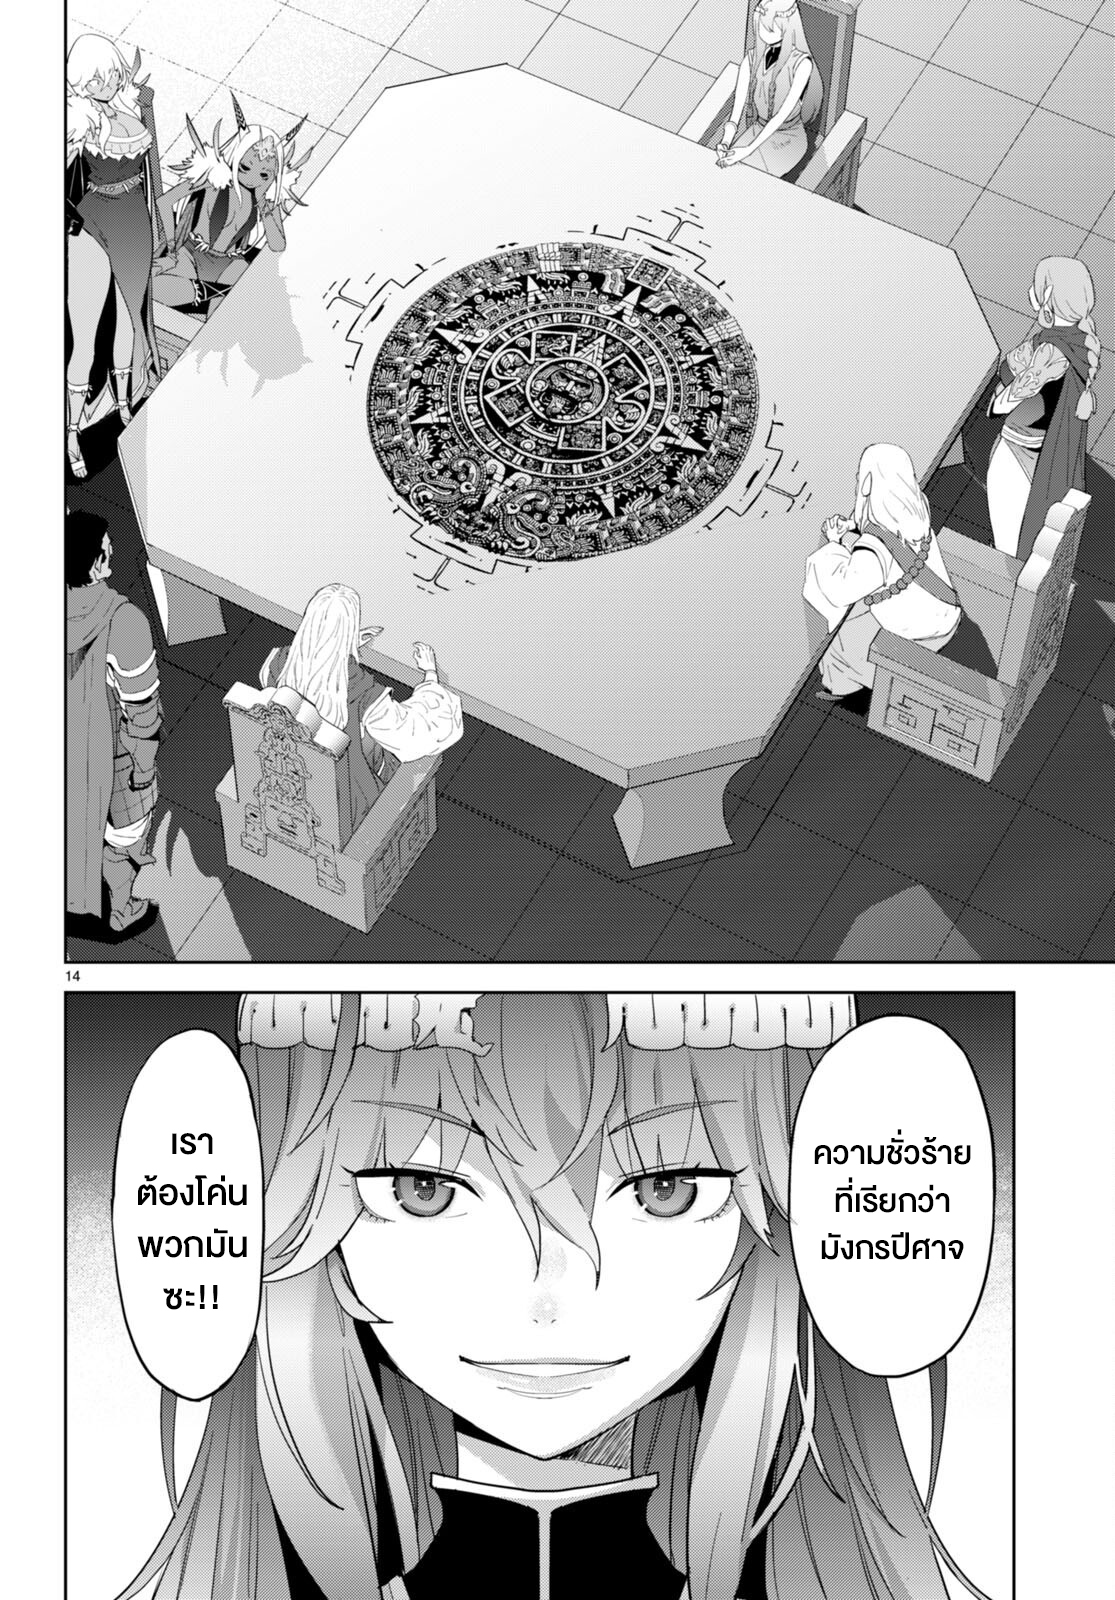 14 rose manga